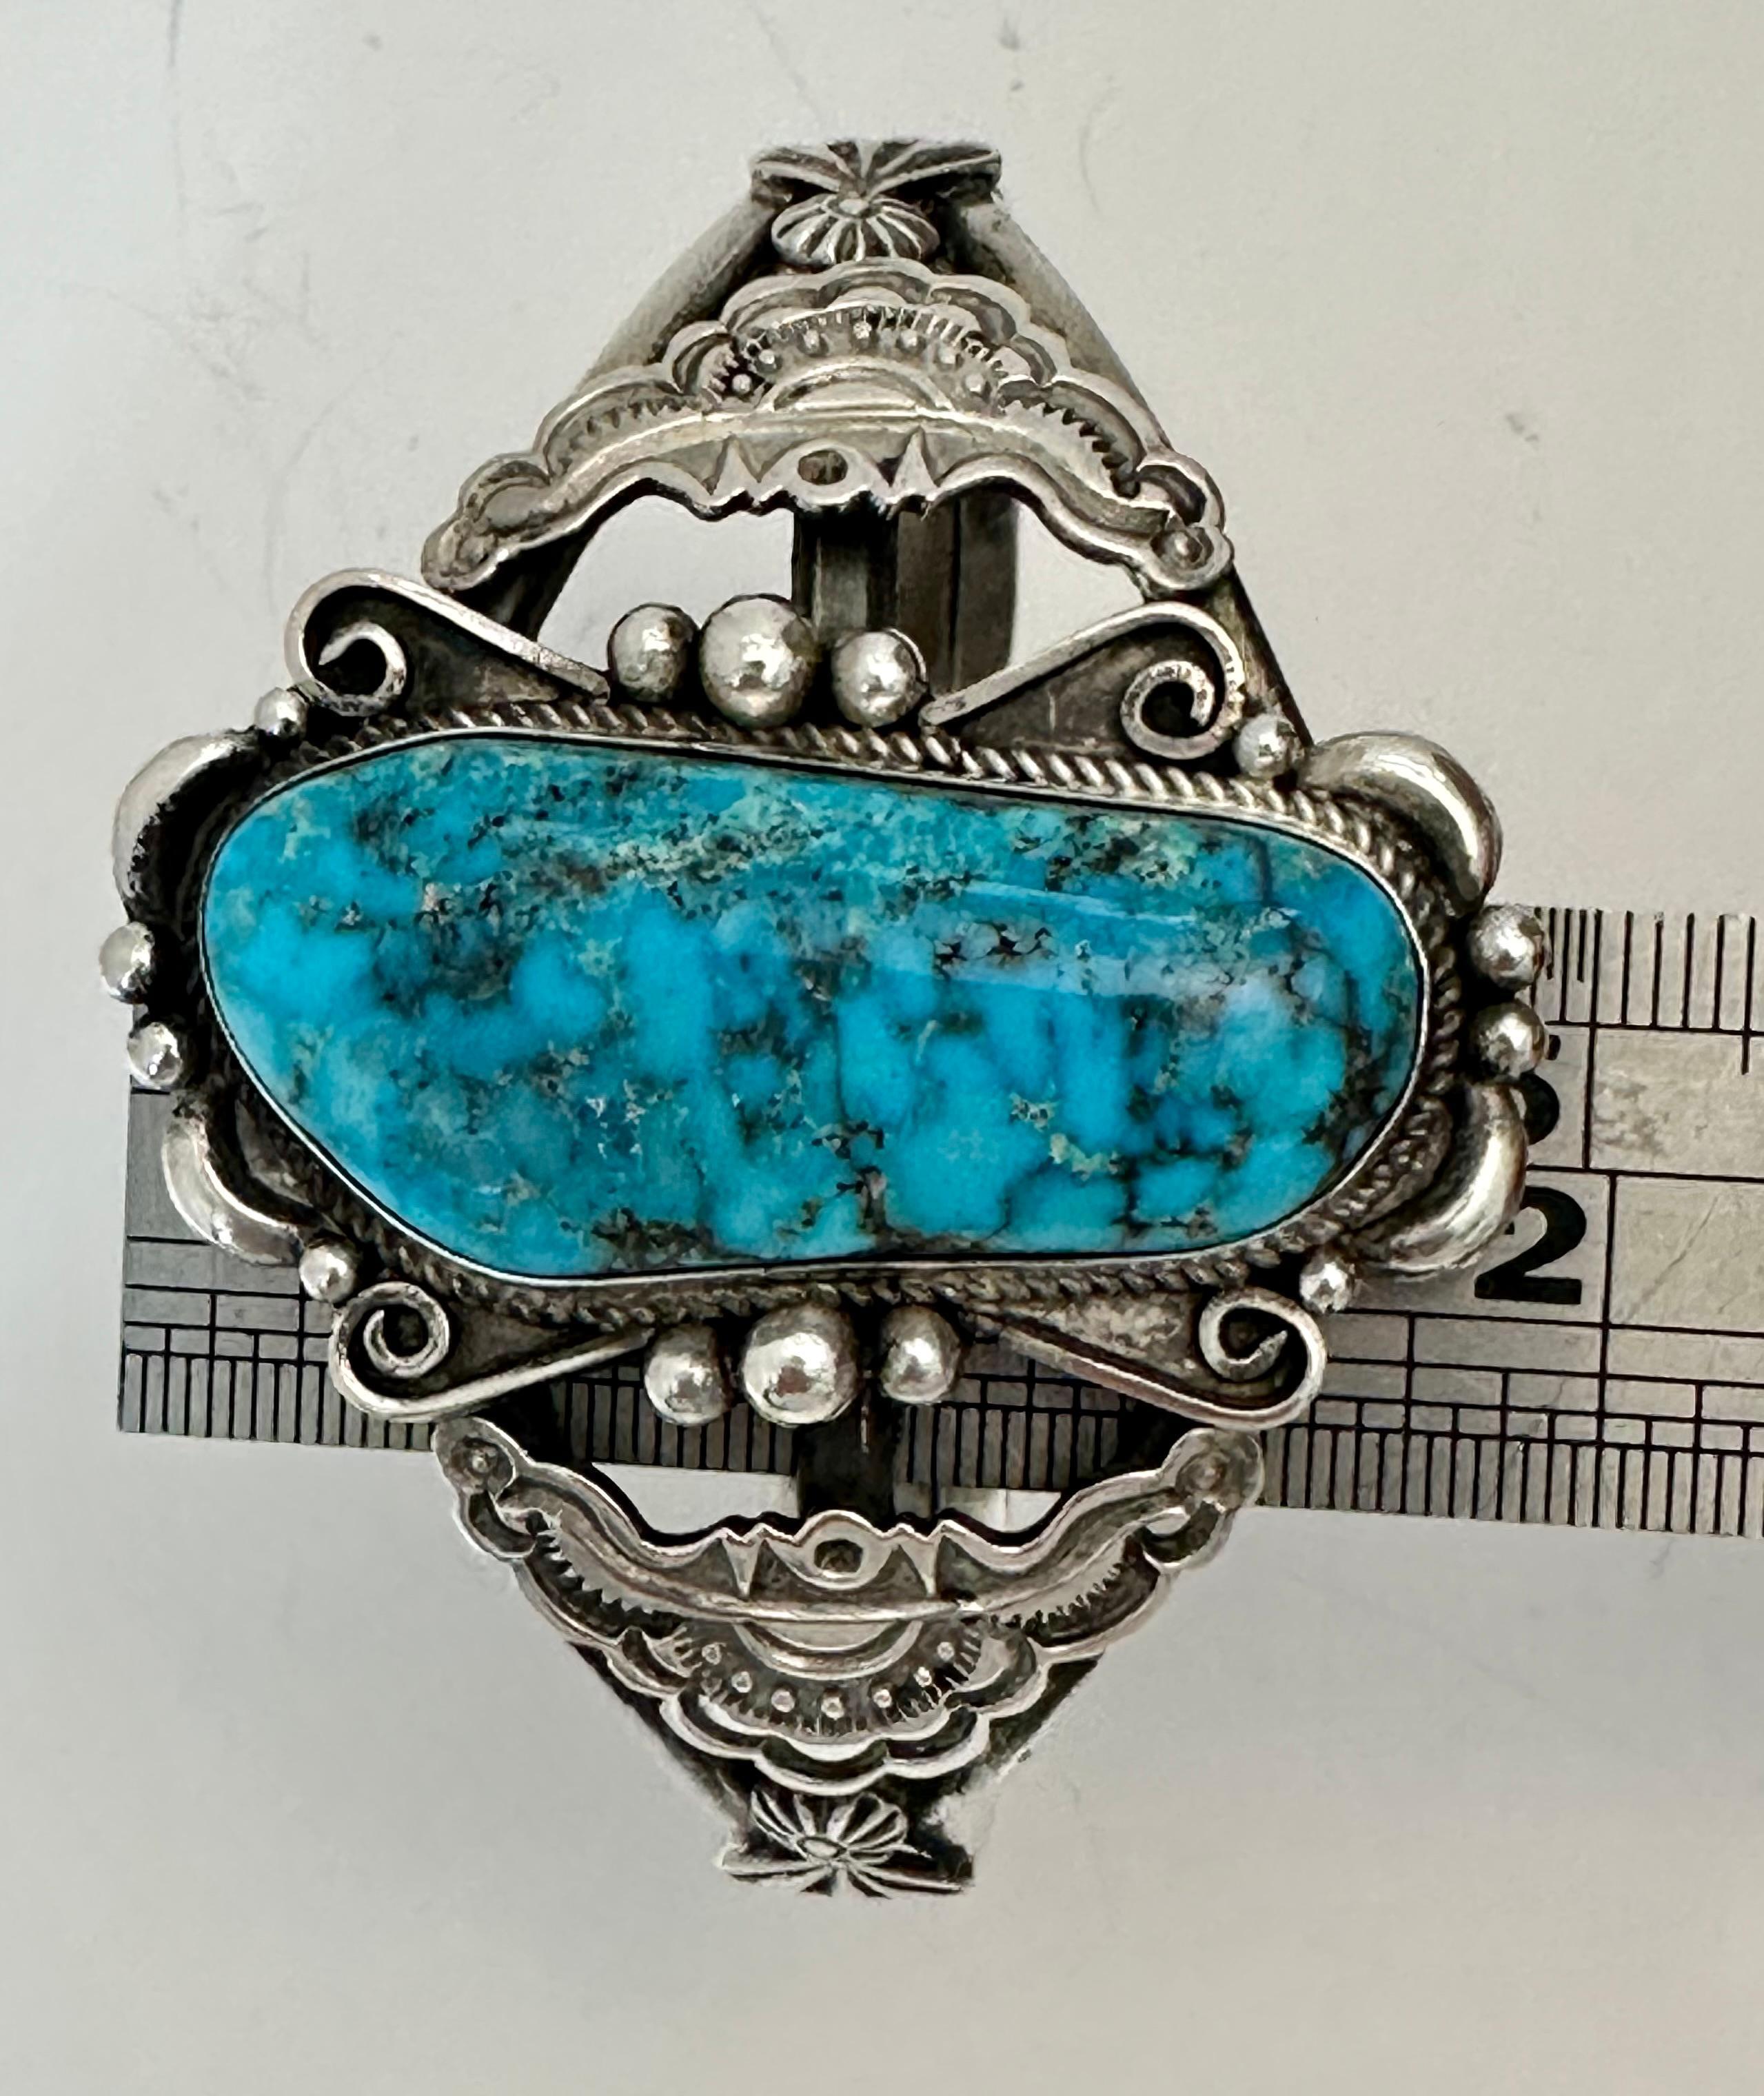 Sterling Silver .925 Birdseye Turquoise Cuff Bracelet 
Handmade by Navajo Artist Ronald Tom
Measures approx 2